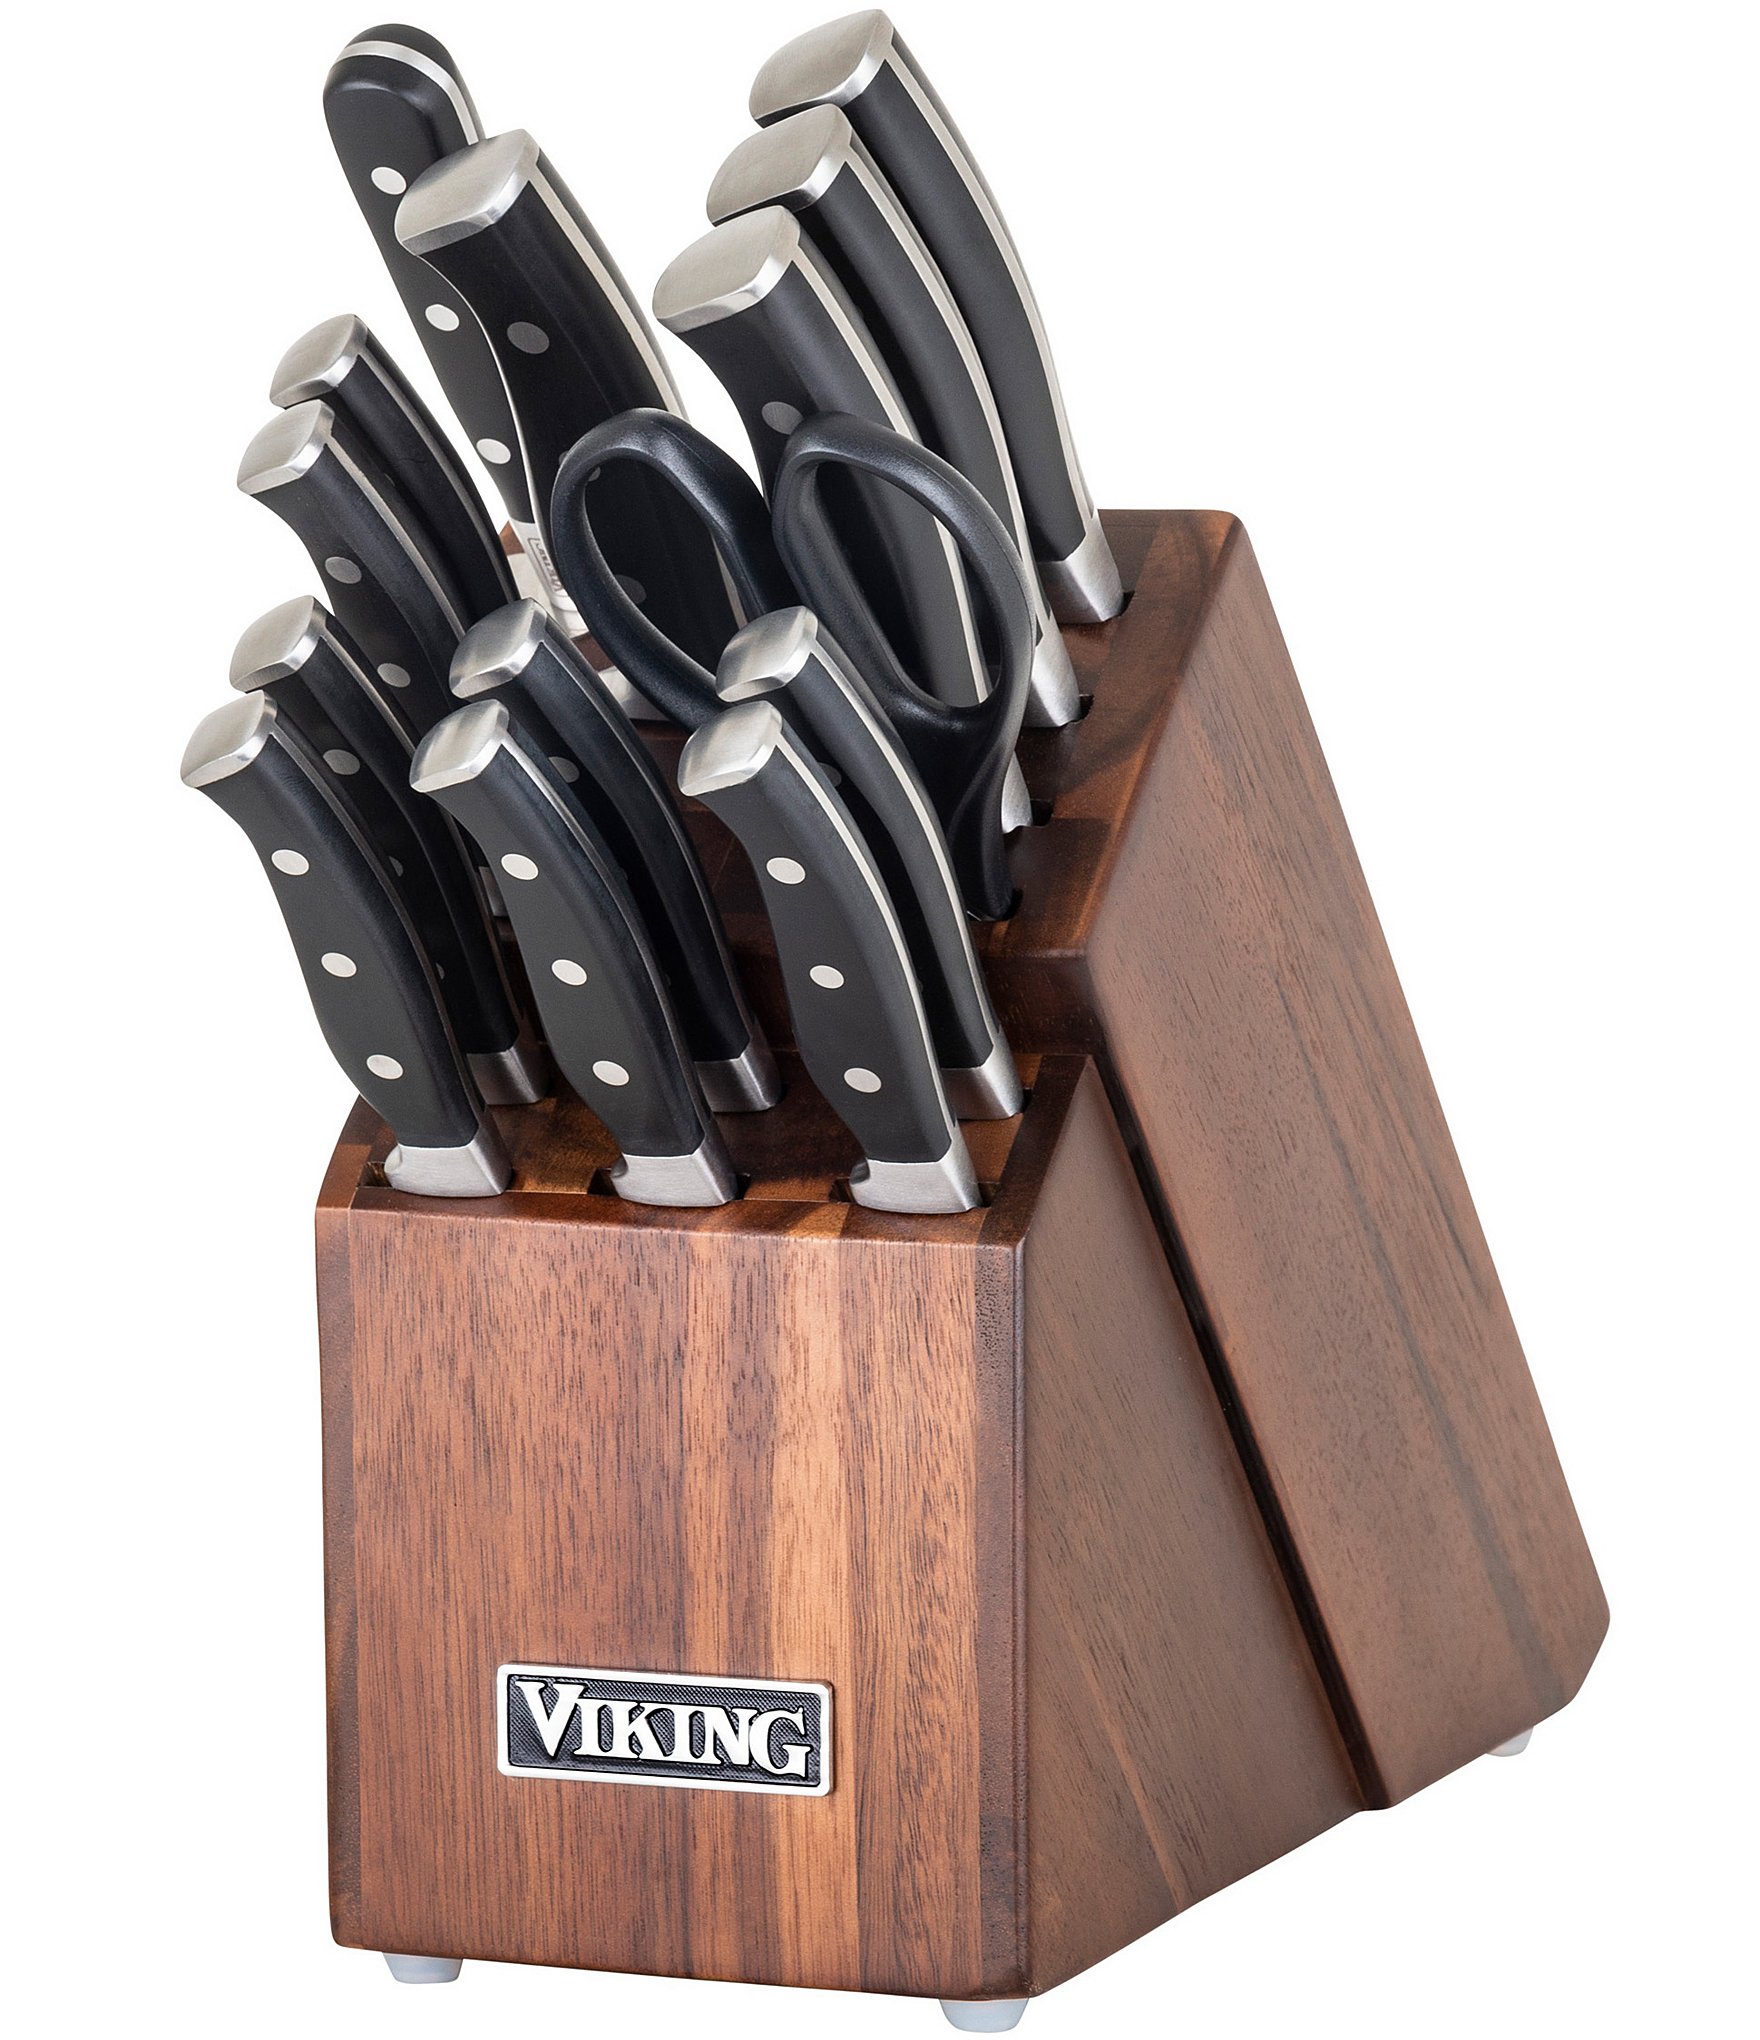 DEIK 15 pcs German Stainless Steel Kitchen Knife Set With Wooden Block –  Knife Depot Co.